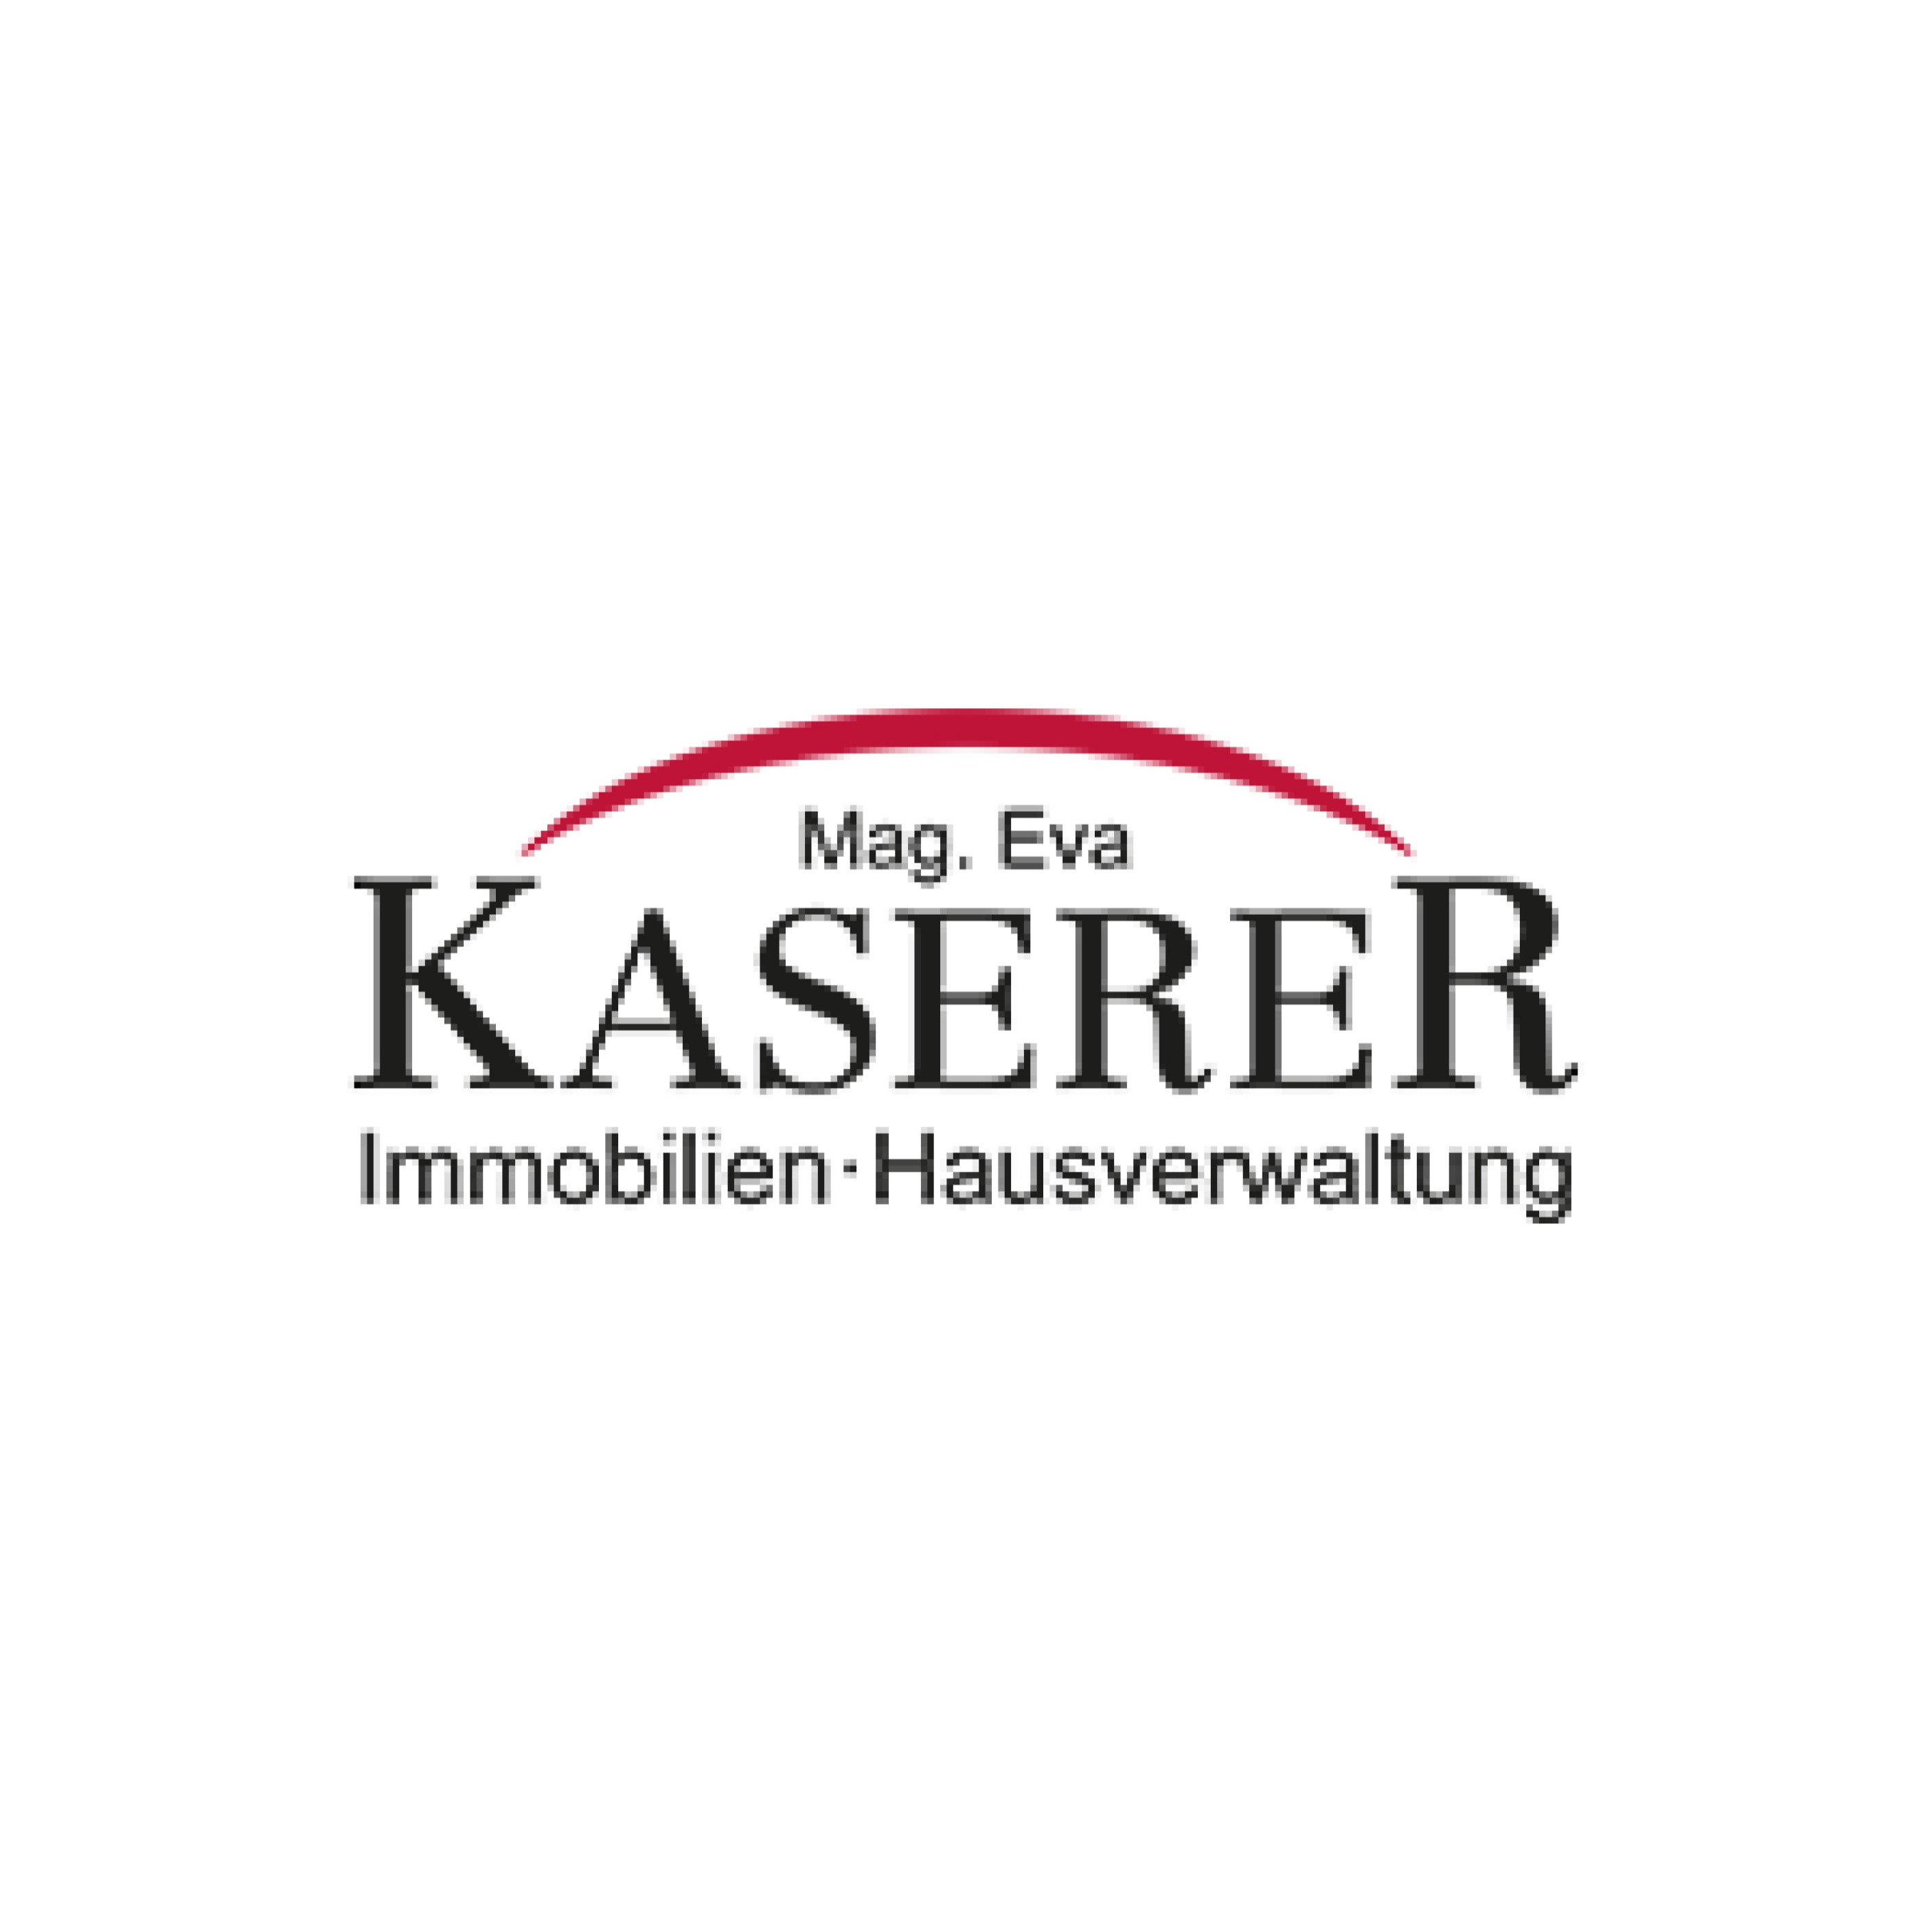 Kaserer Eva Mag. Immobilien & Hausverwaltung GmbH Logo